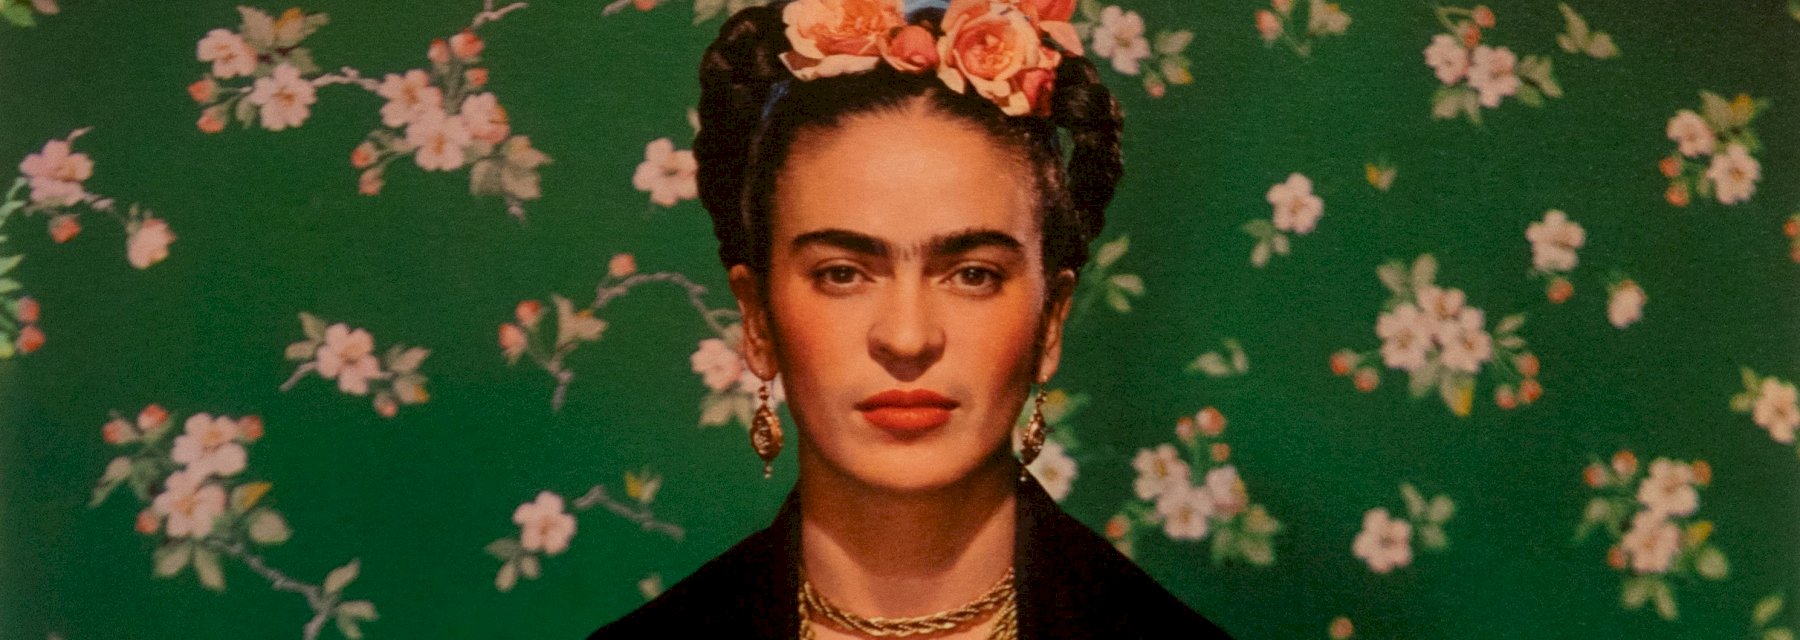 Frida Kahlo’s legacy: How she became a celebrated artist